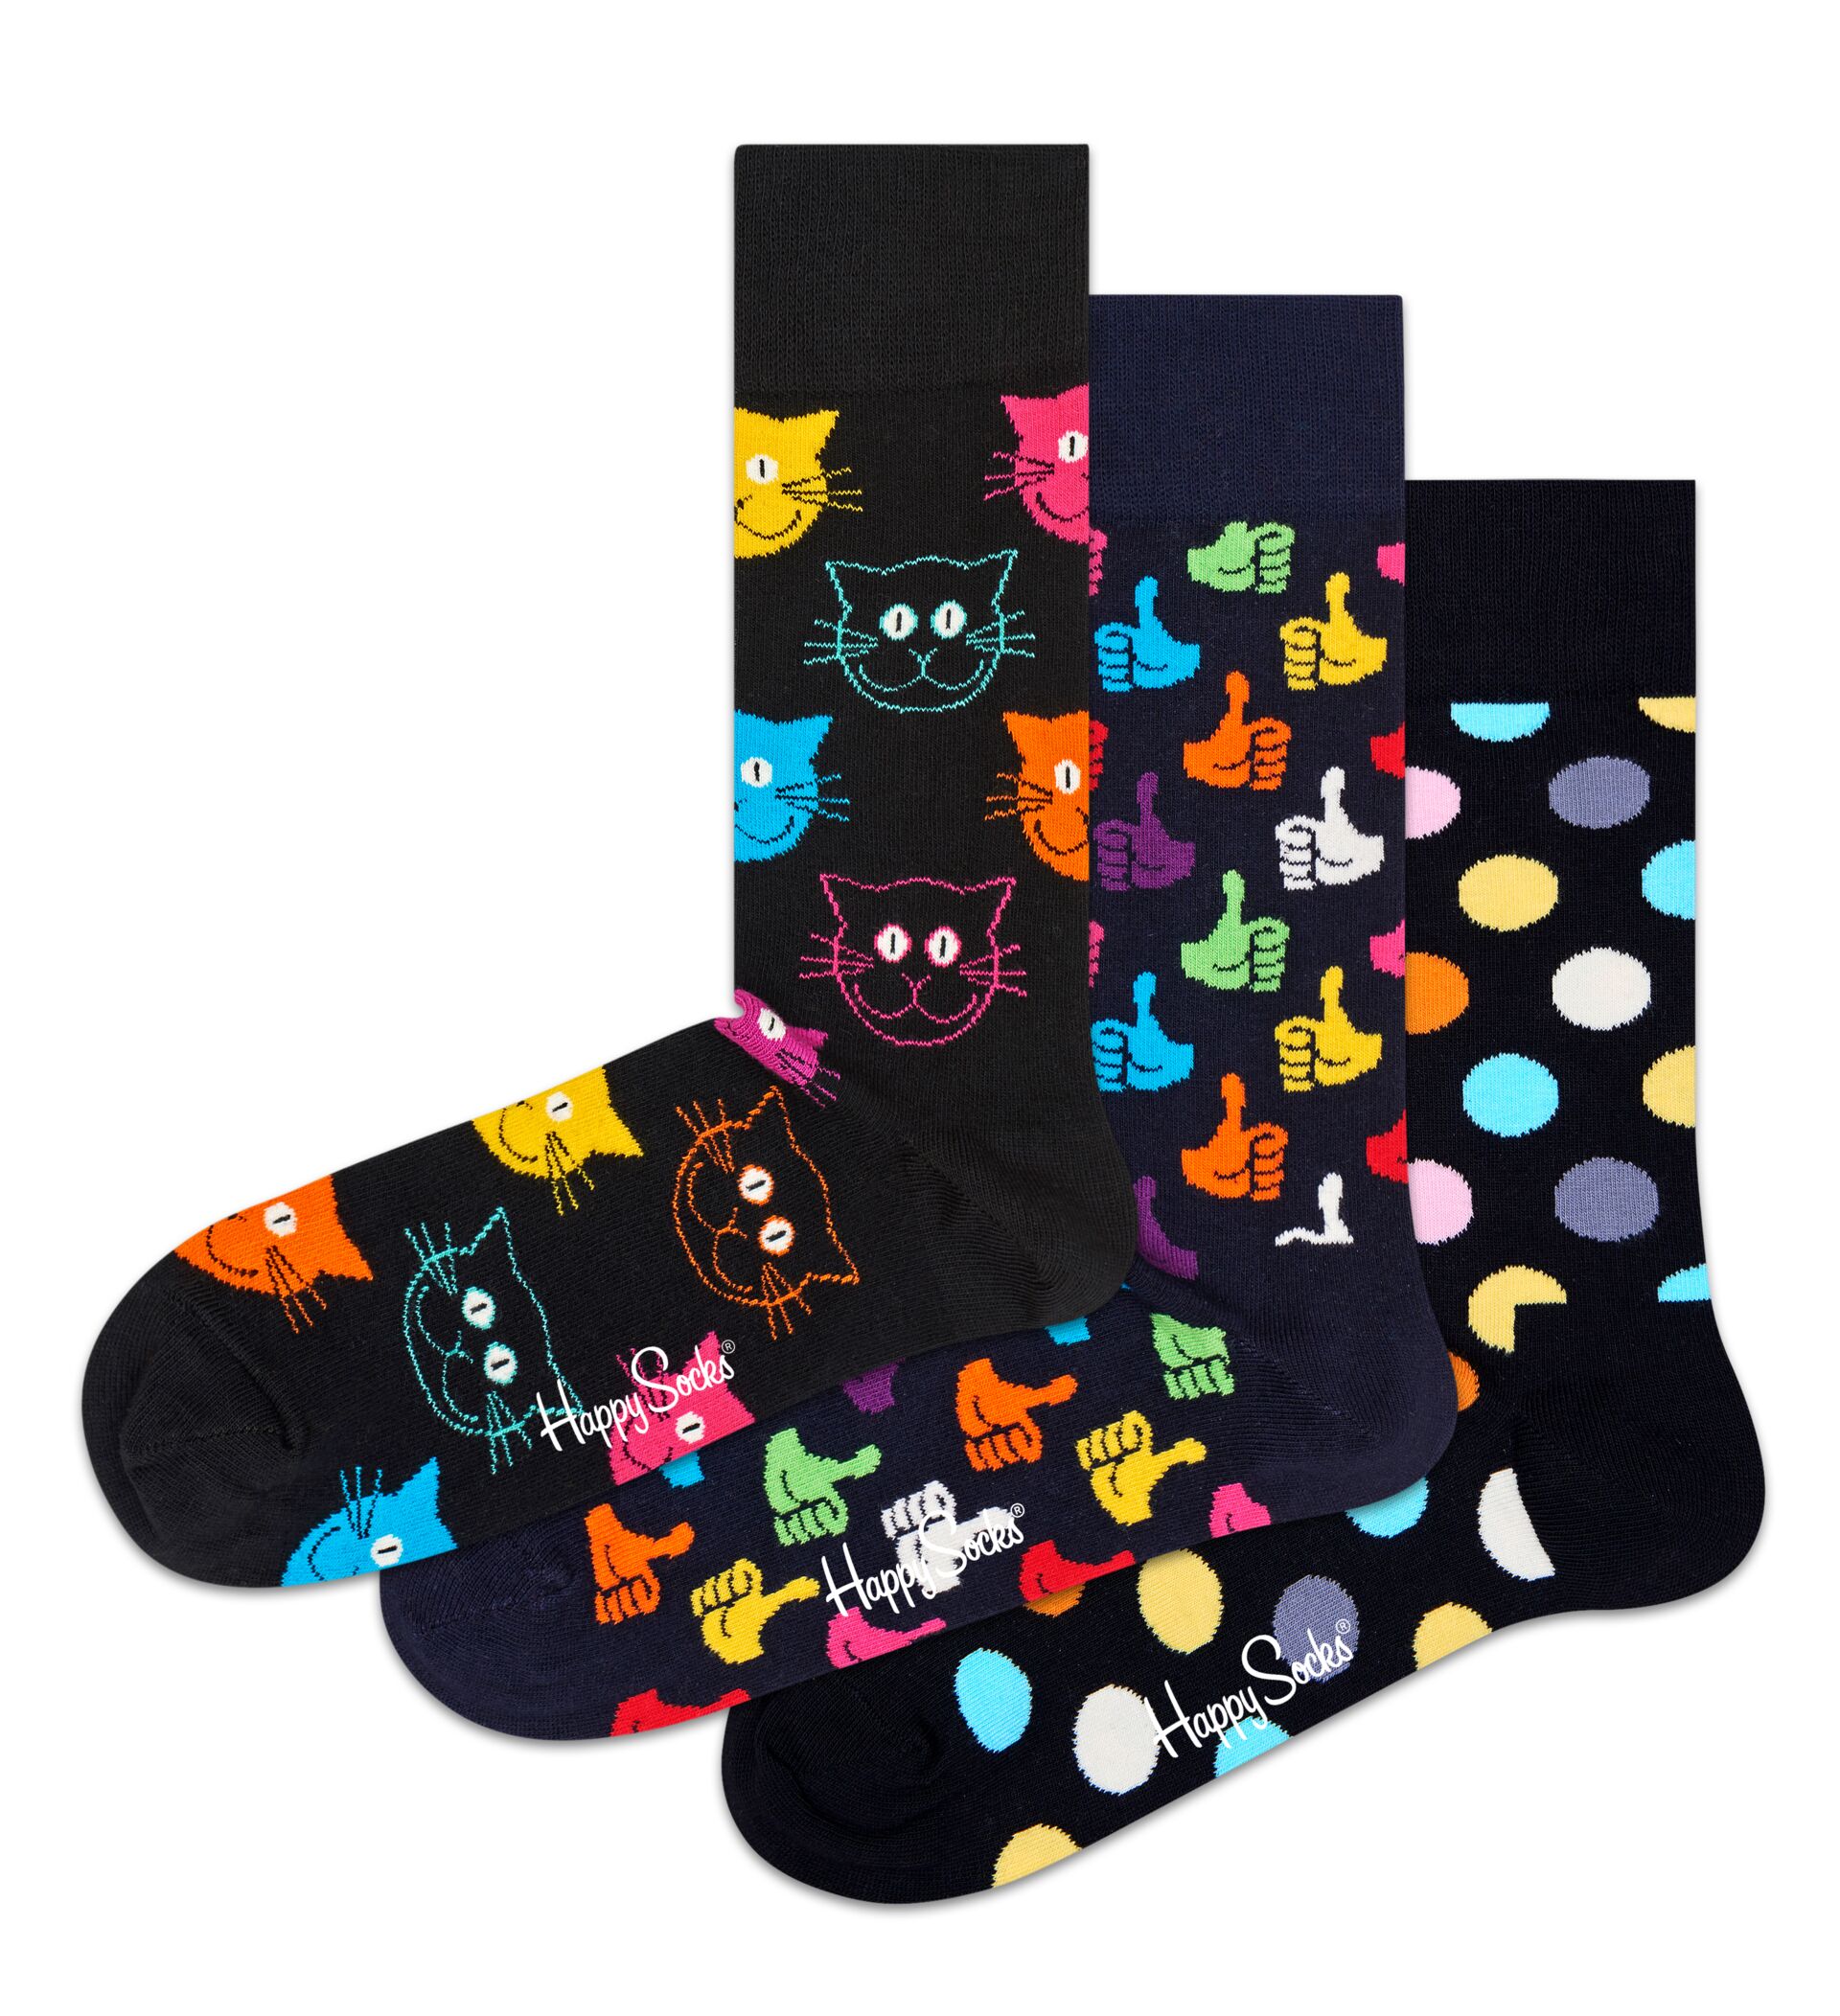 Happy Socks Cat Print Sock 3-Pack - Black,Blue,Green,Orange,Pink,Red,White,Yellow,Turquoise,Light Blue - Unisex